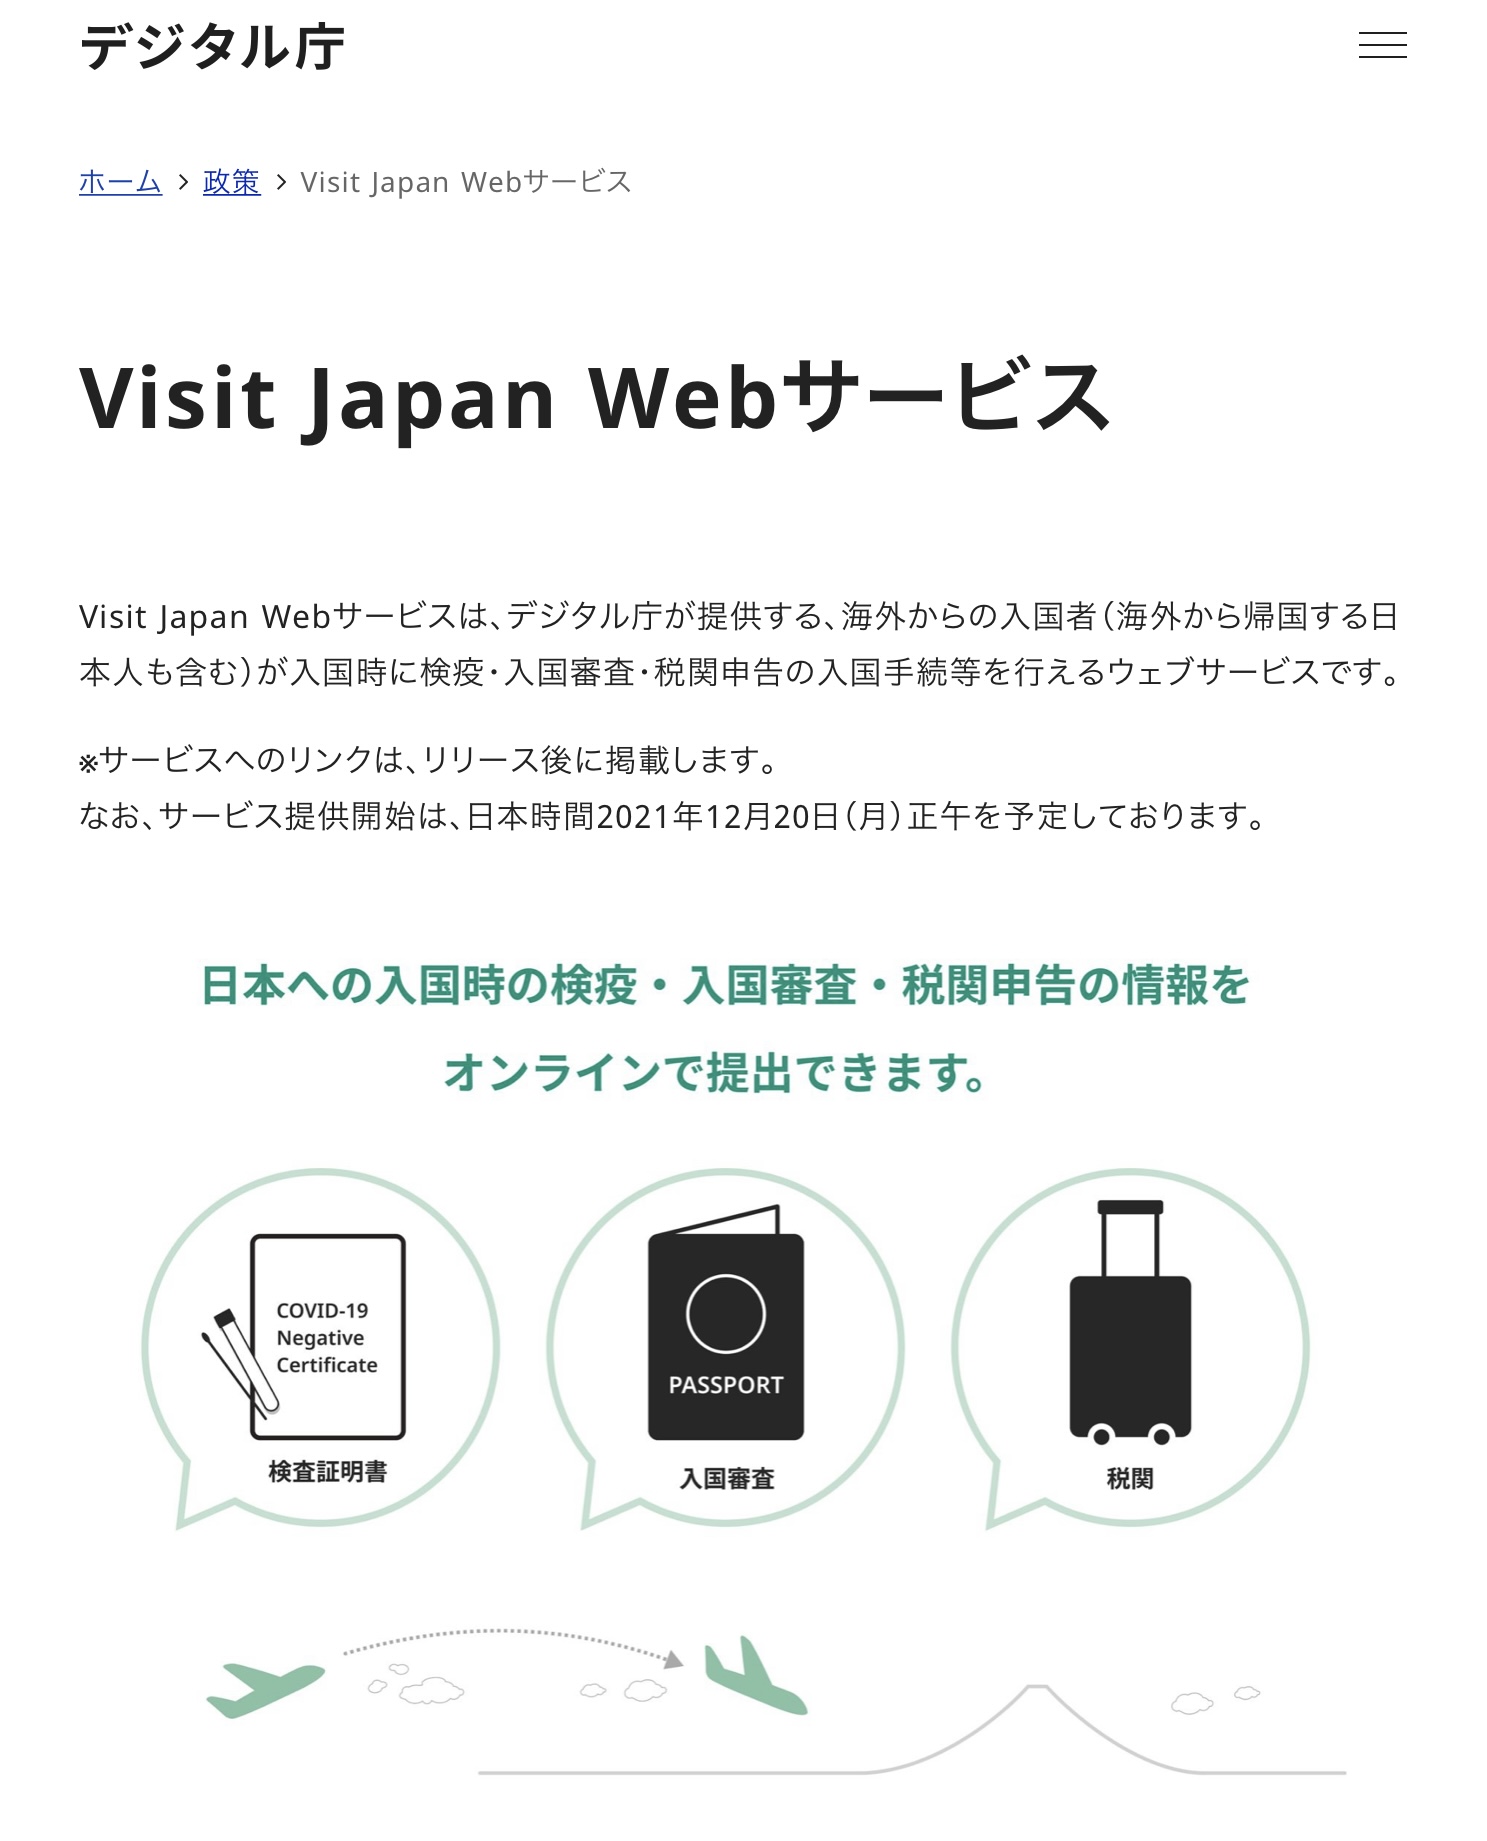 visit japan web hilfe